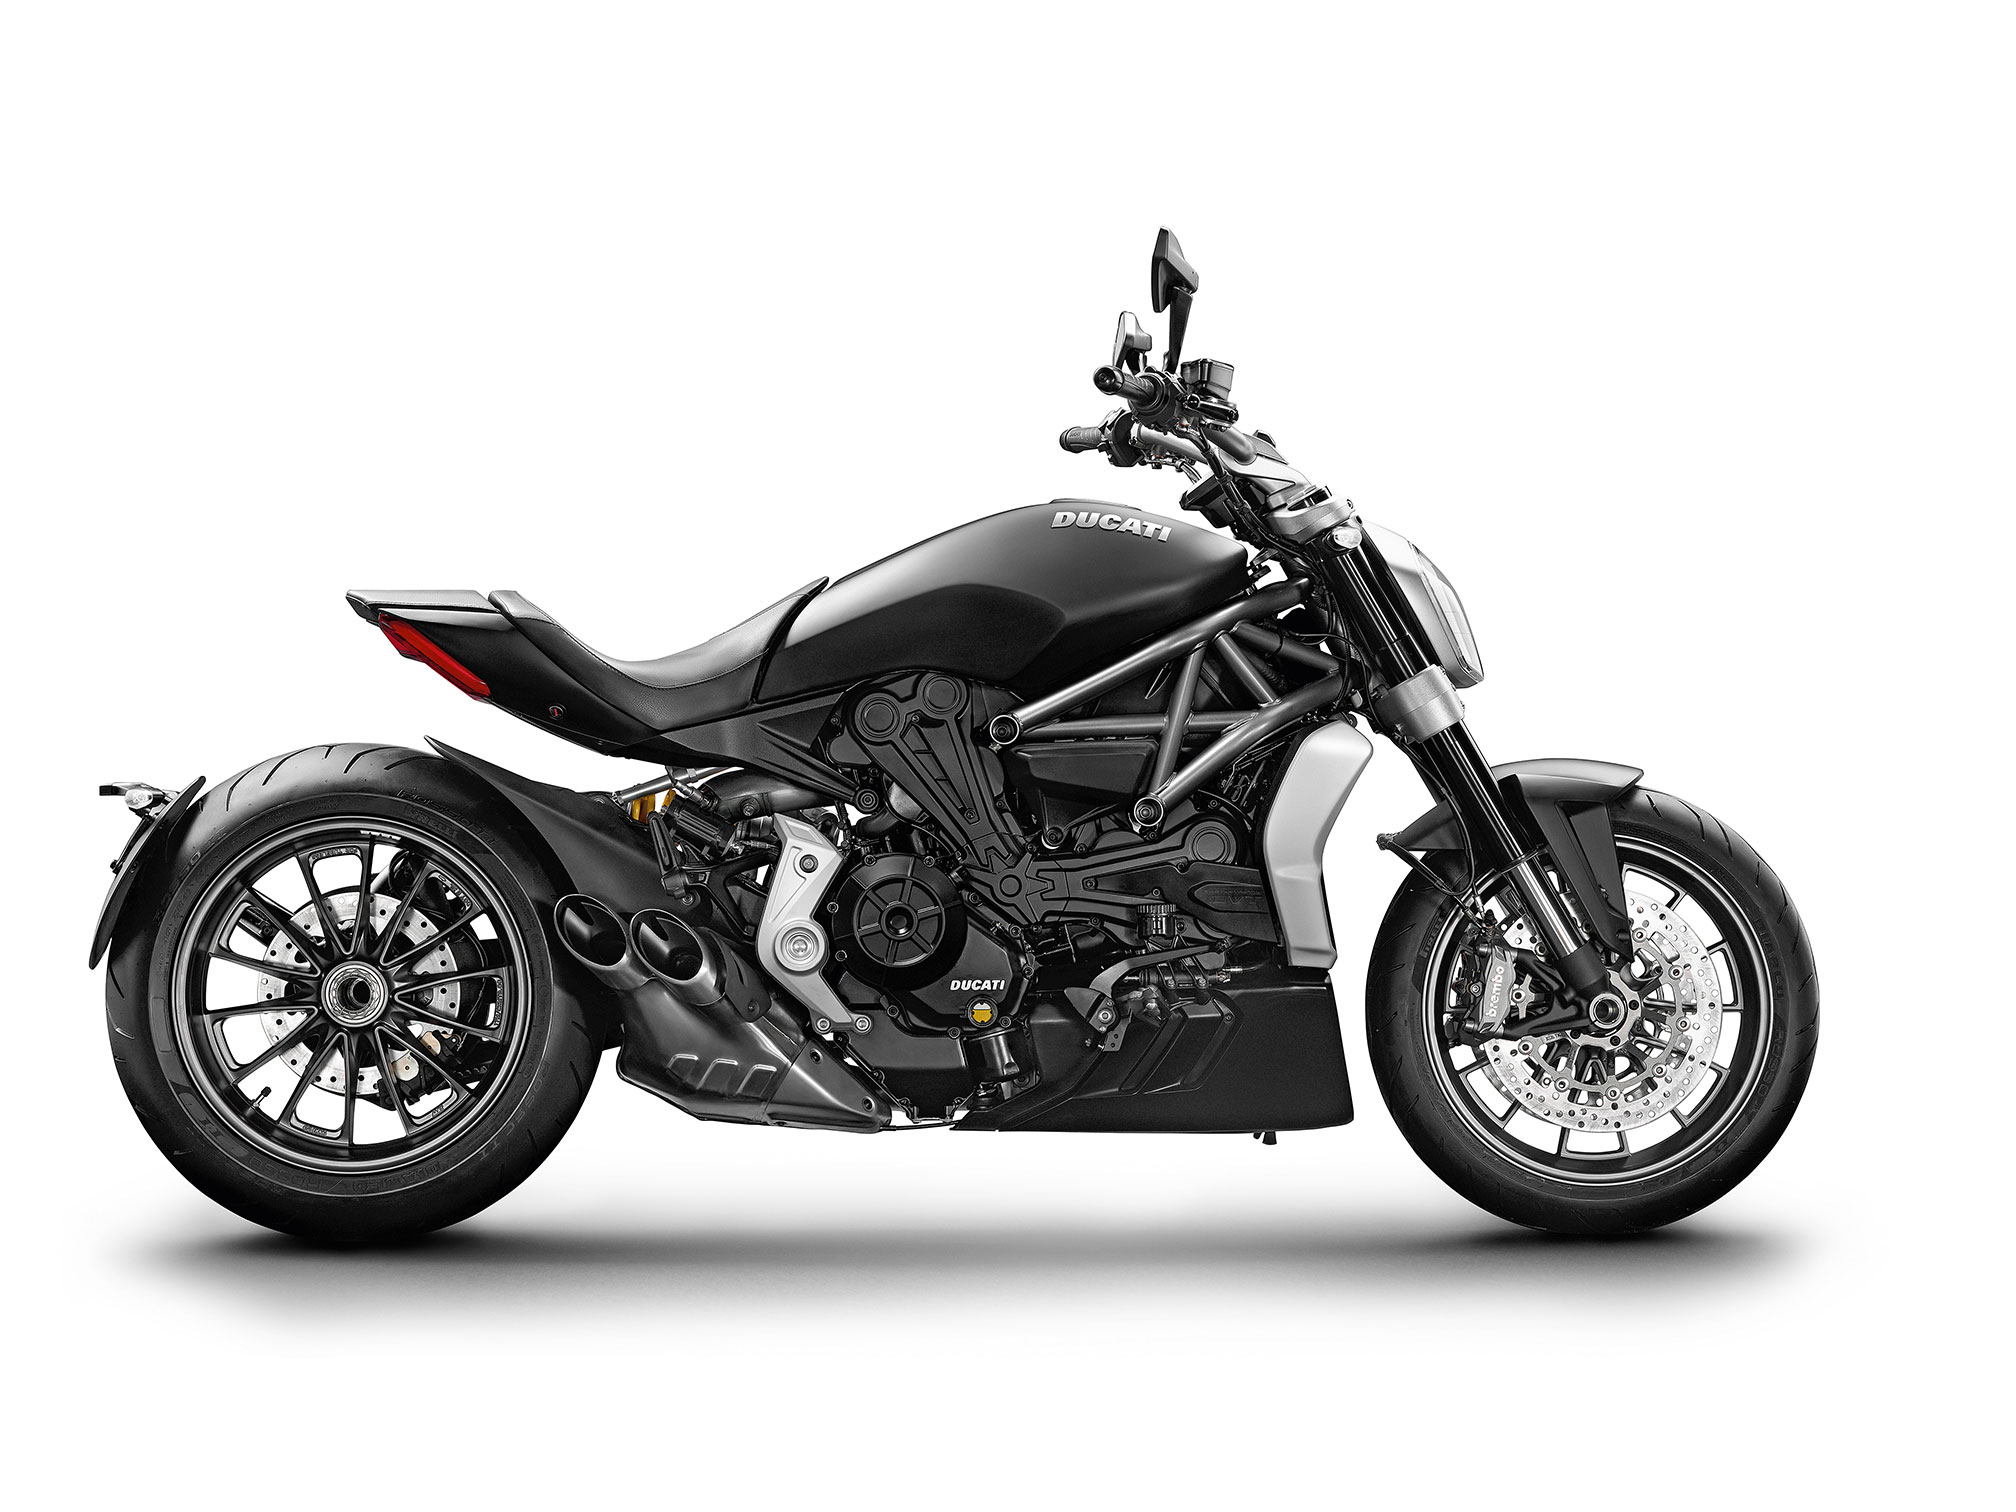 2017 Ducati Motorcycle Models at Total Motorcycle